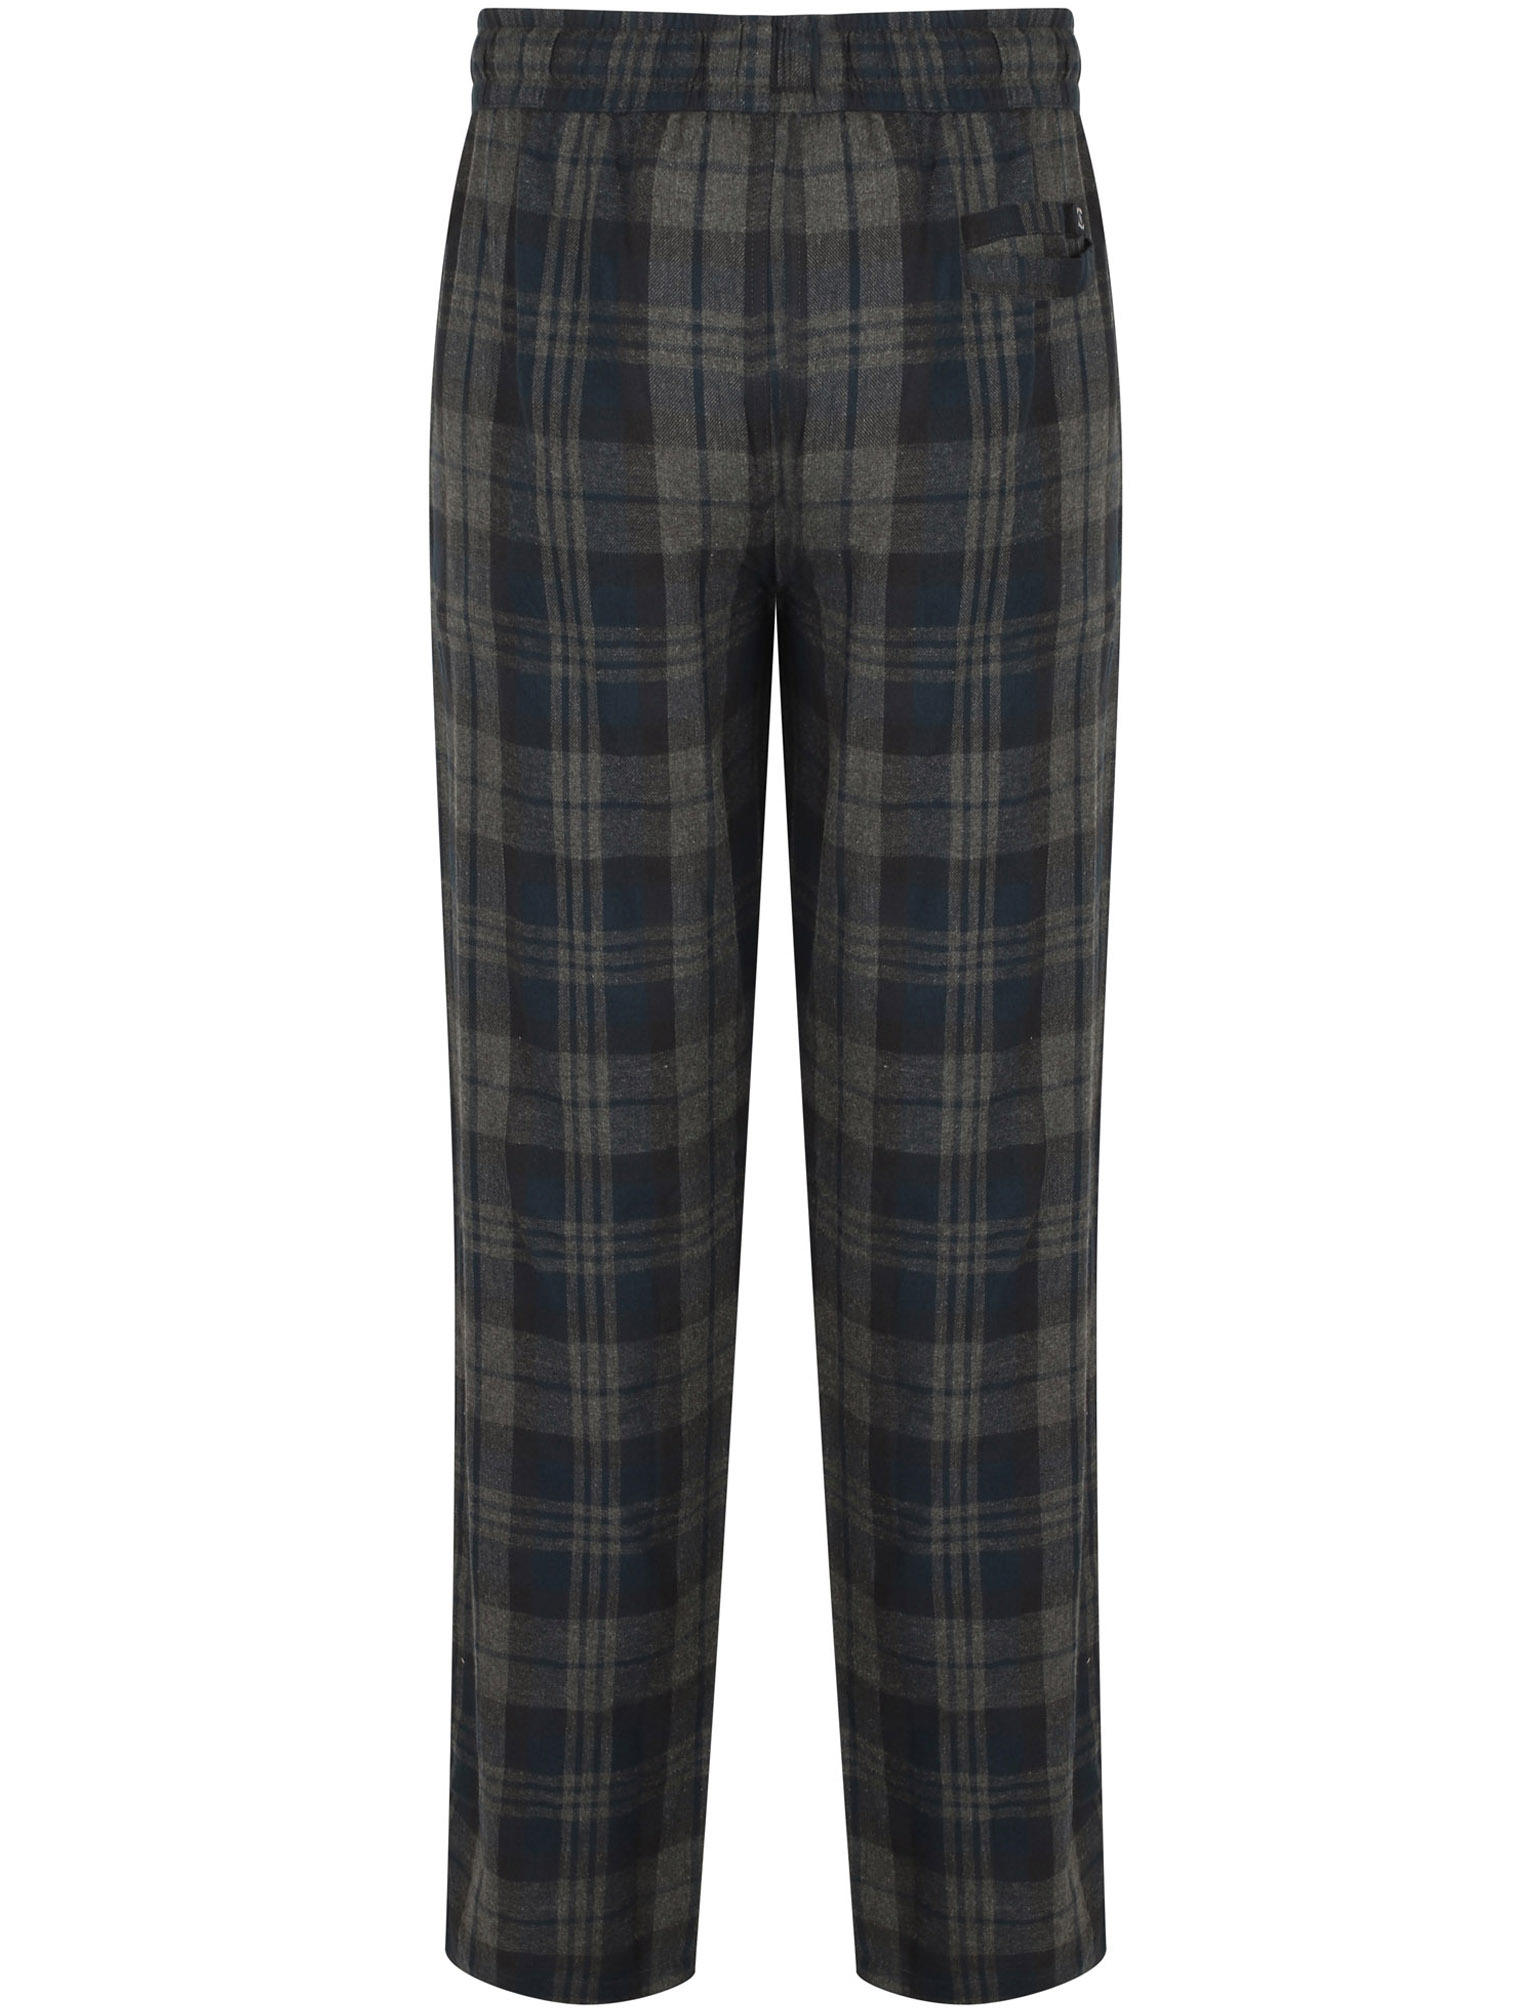 Tokyo Laundry Mens Chamois Flannel Checked Lounge Pants PJ Pyjama ...